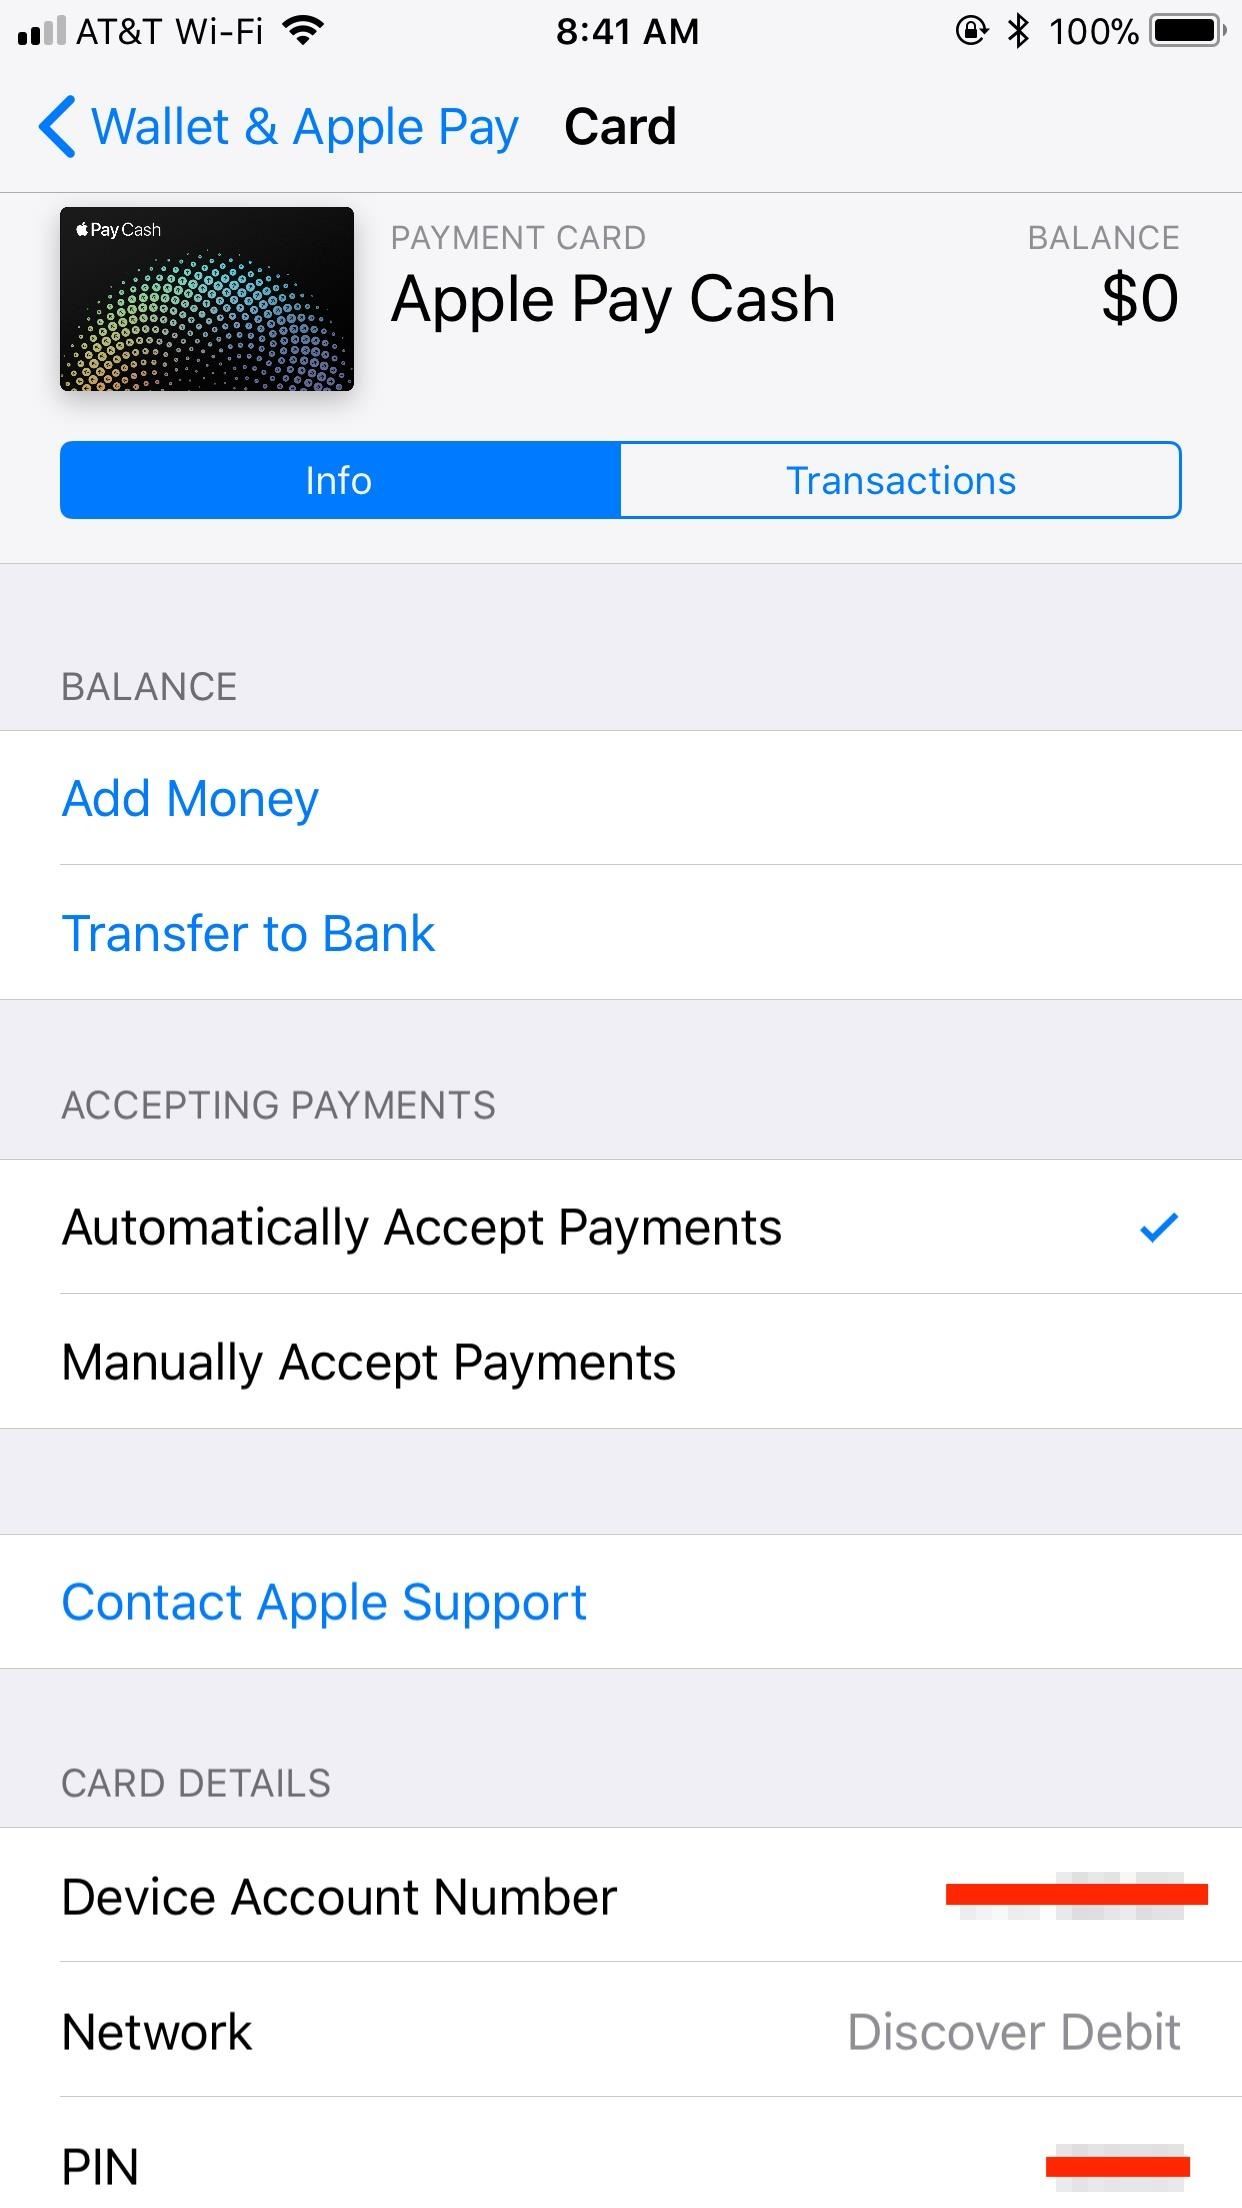 apple pay cash 101 add money your card balance.w1456